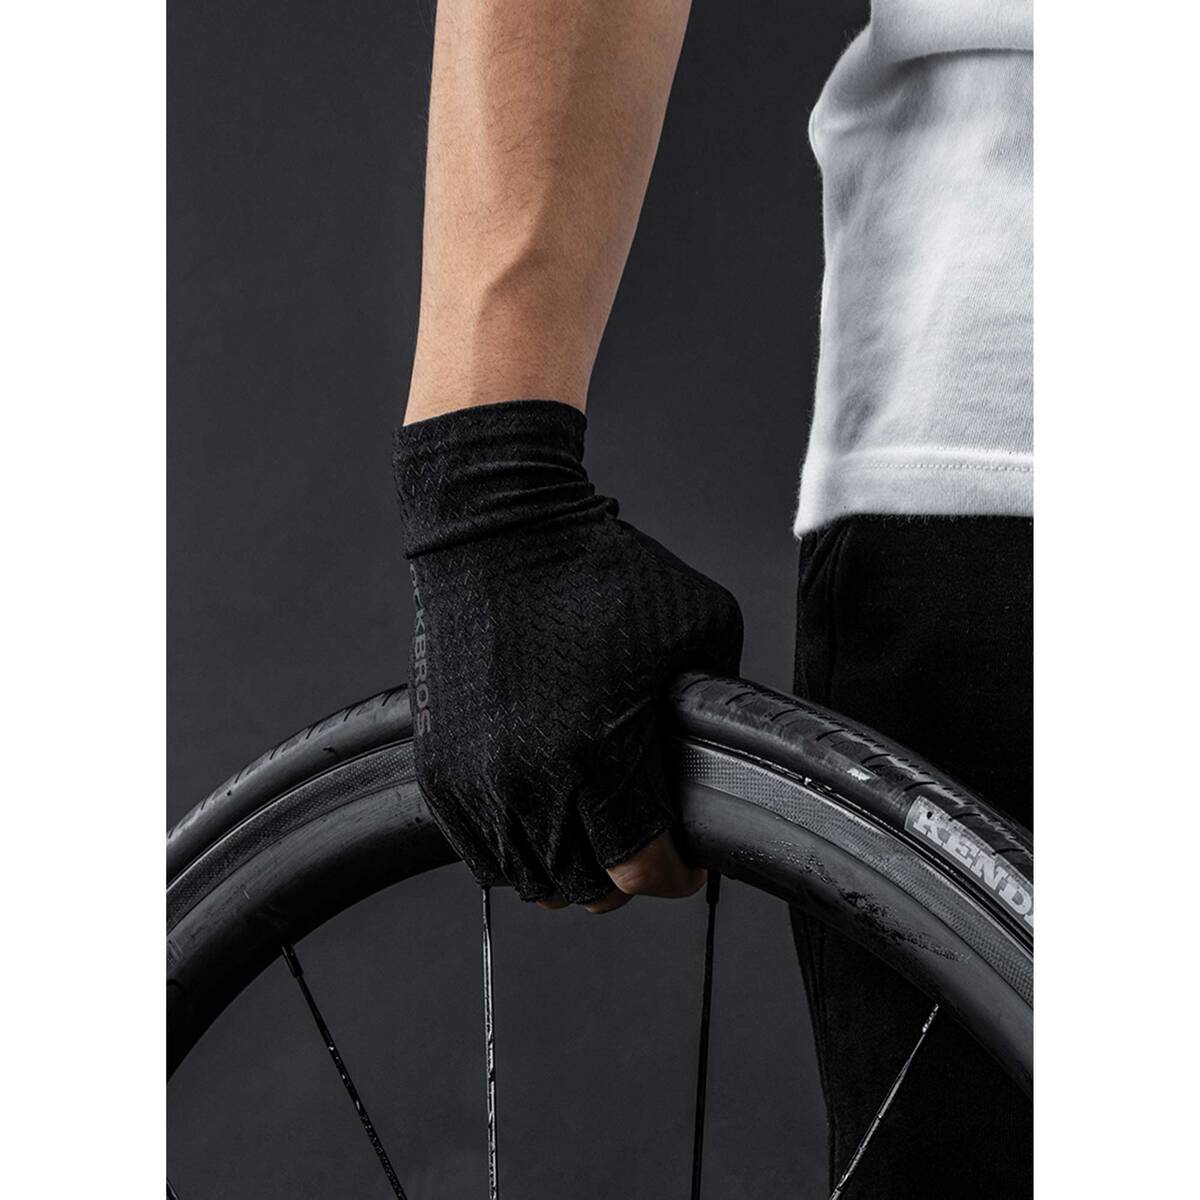 ROCKBROS Half Finger Cycling Gloves S221BK Small